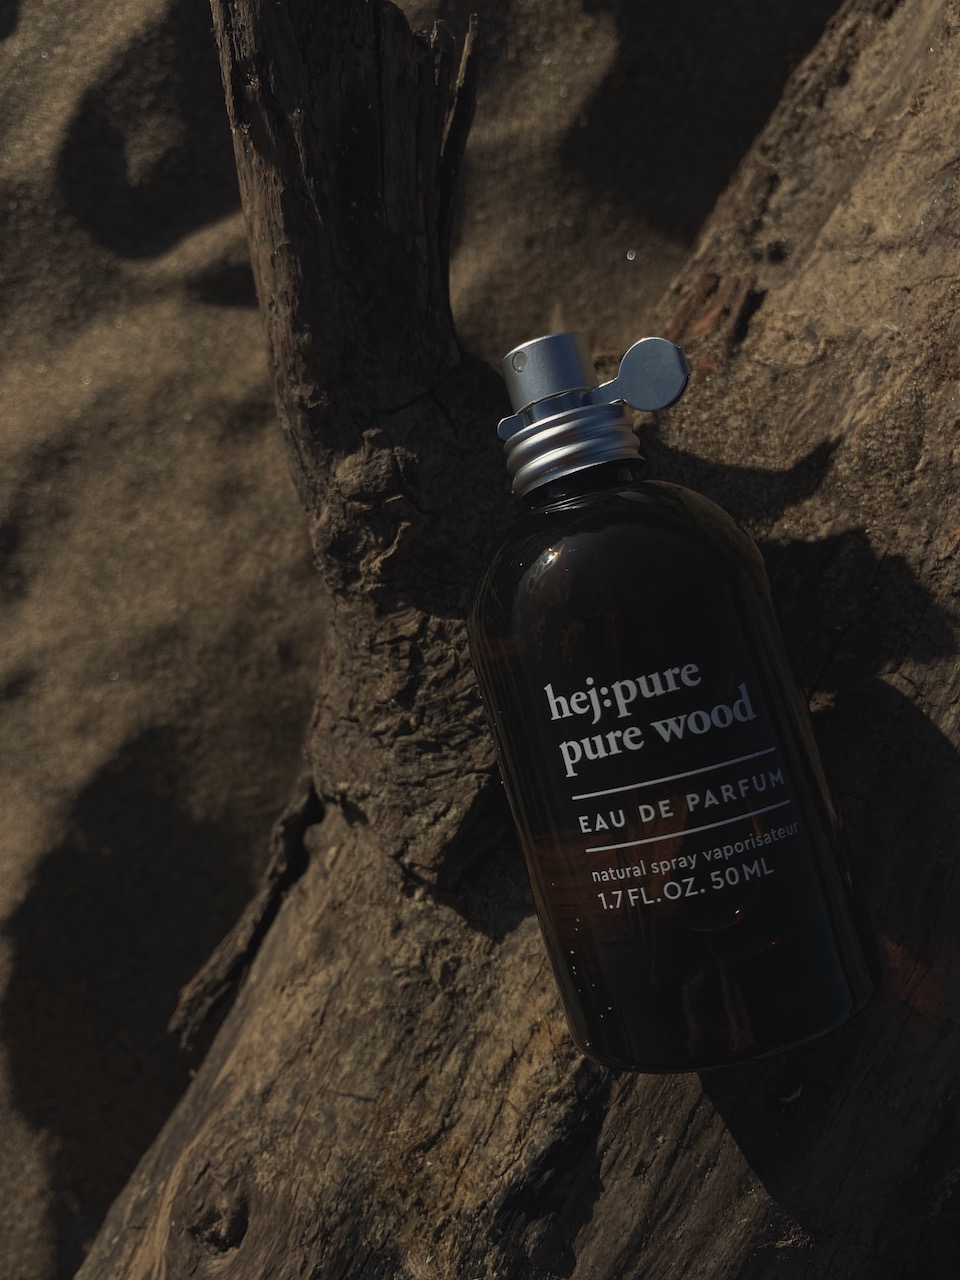 Bild Wood Hejpure Perfume